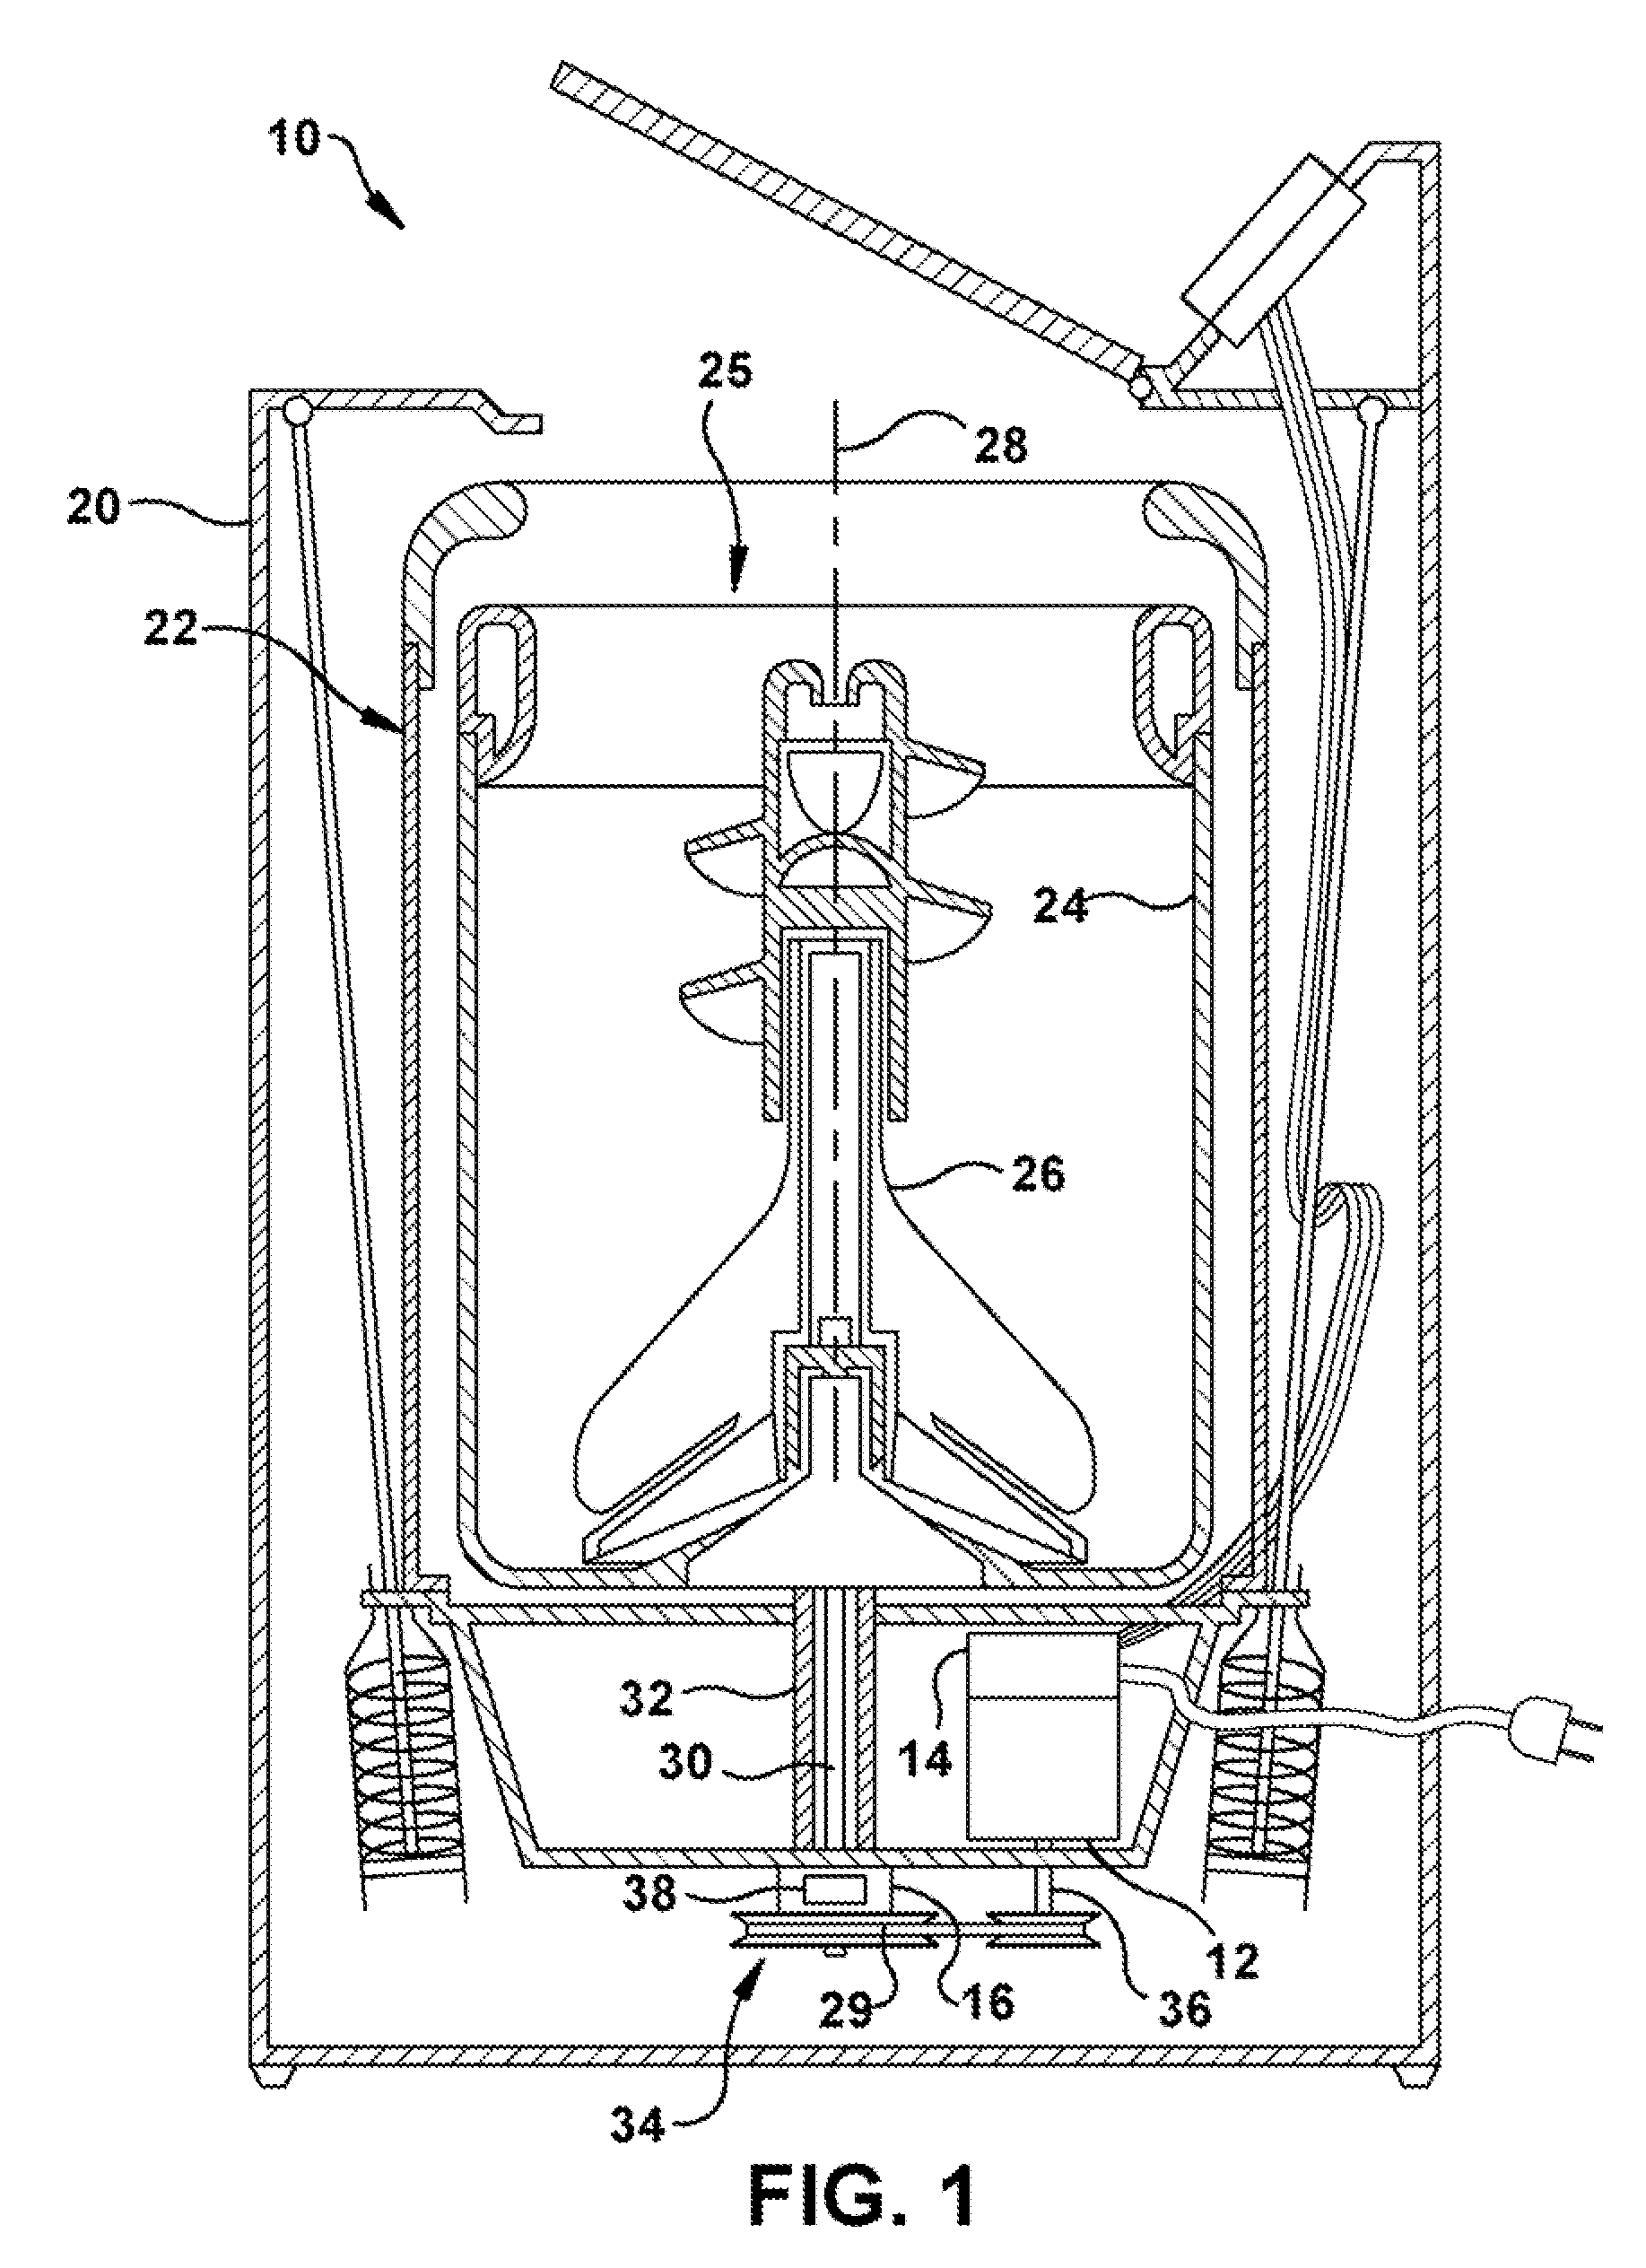 Motor apparatus and method